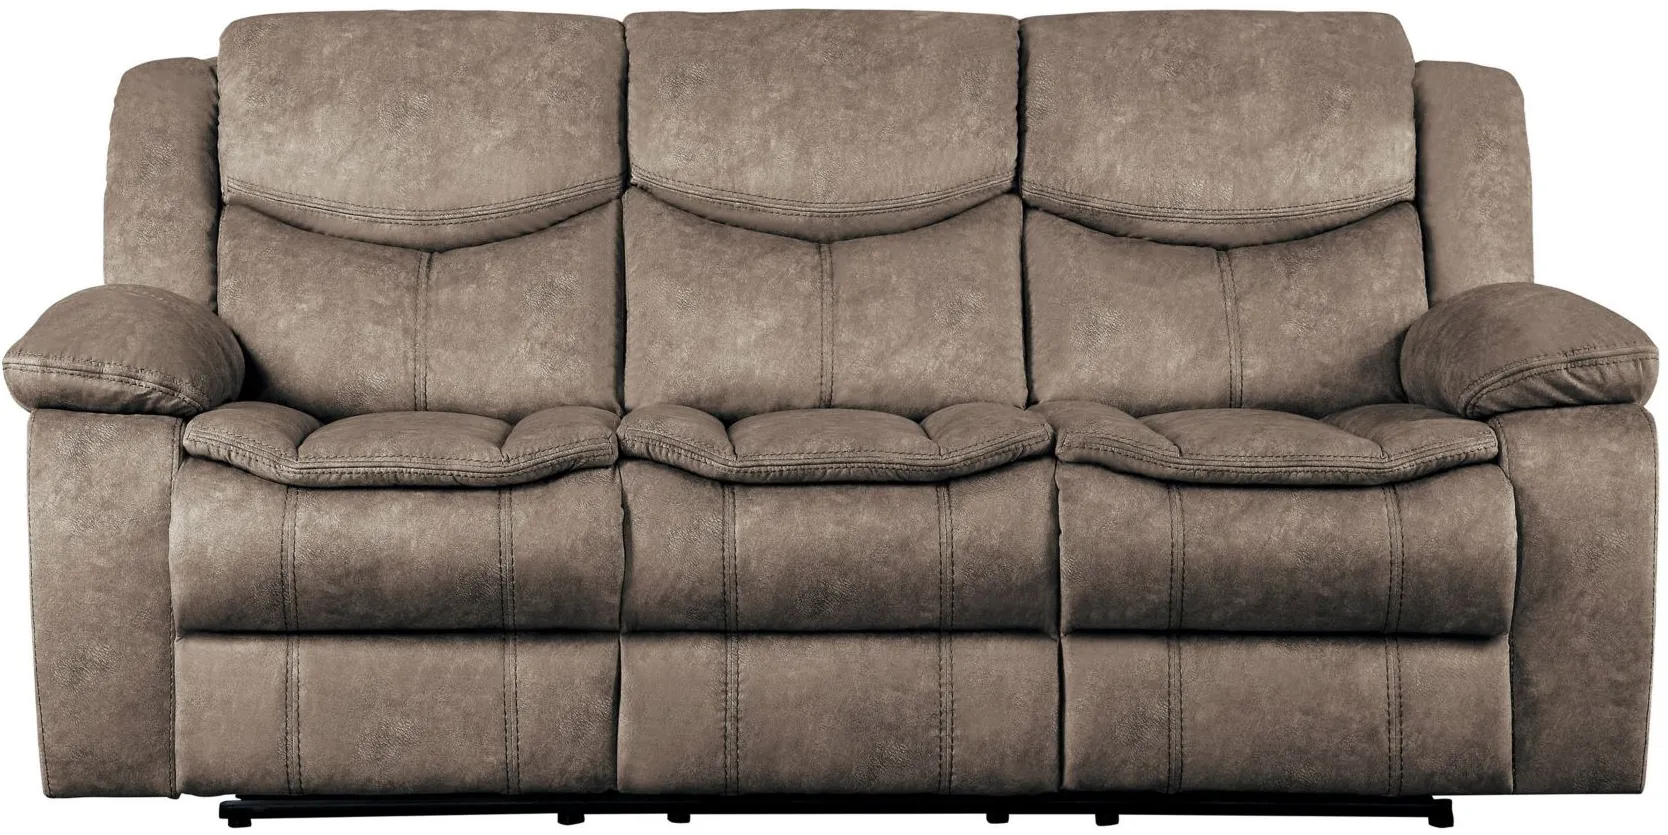 Arden Reclining Sofa in Dark Brown by Homelegance